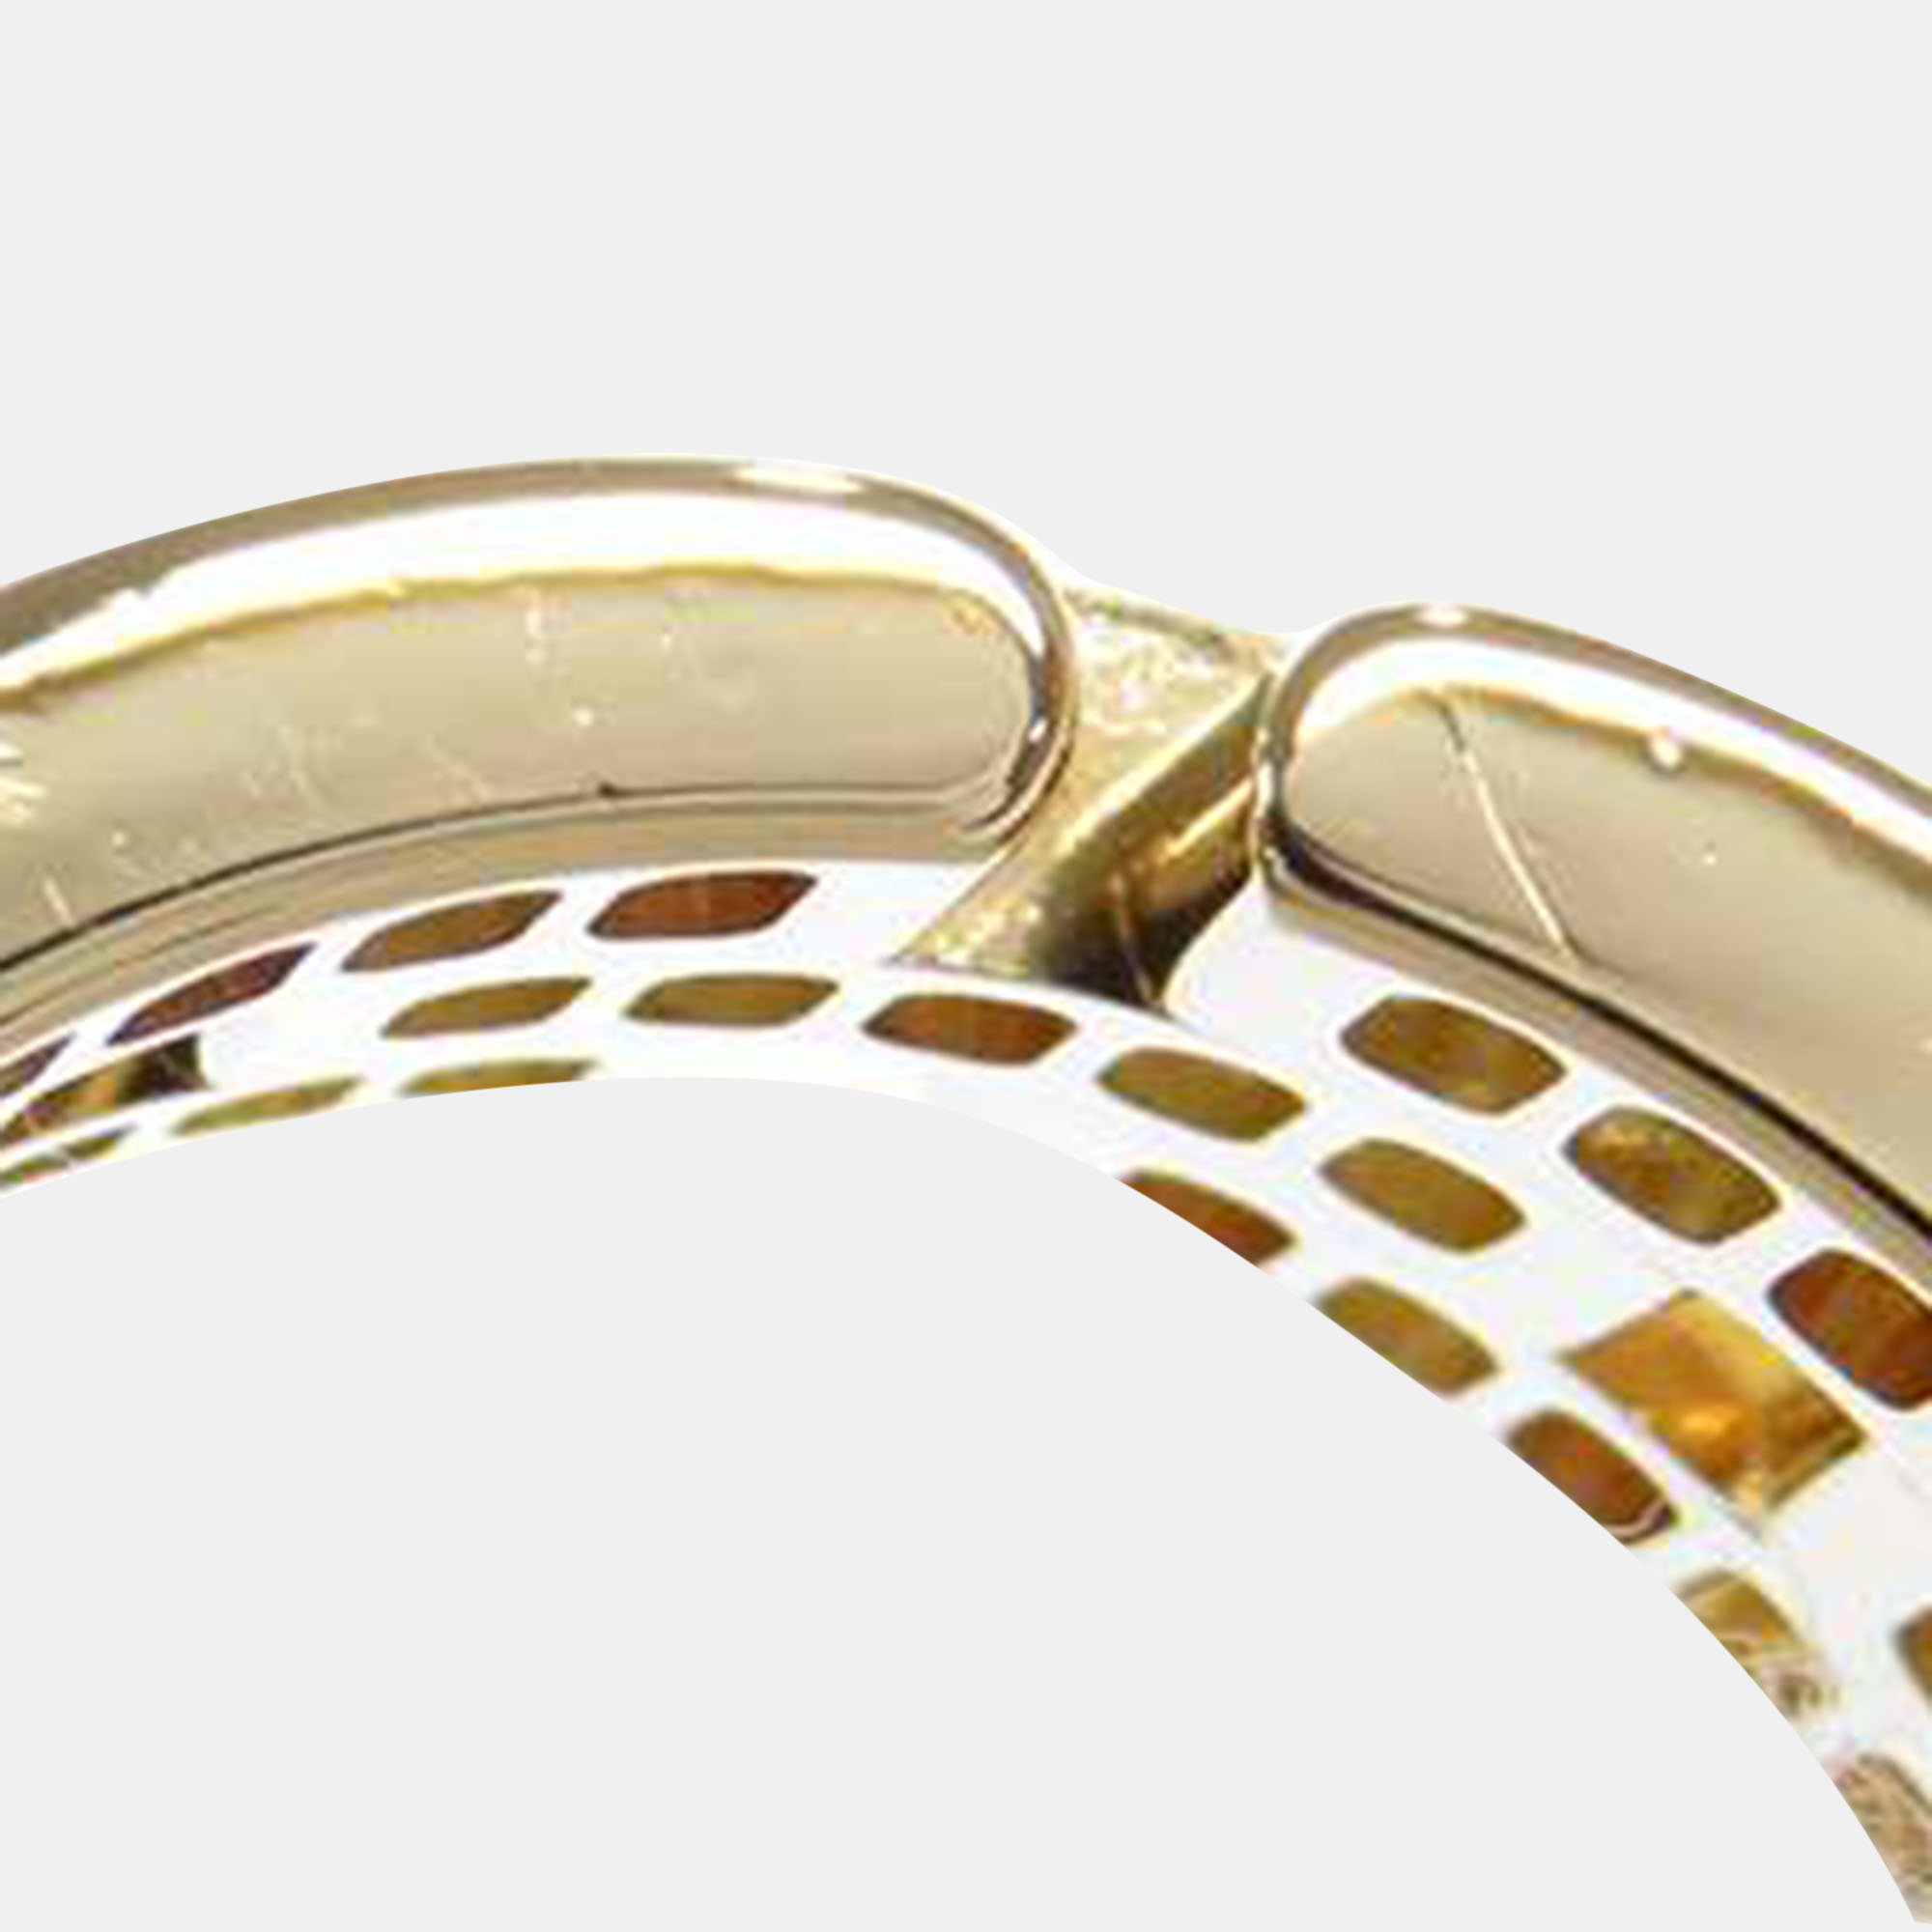 Cartier Maillon Panthere 18K Yellow Gold Diamond Ring EU 58